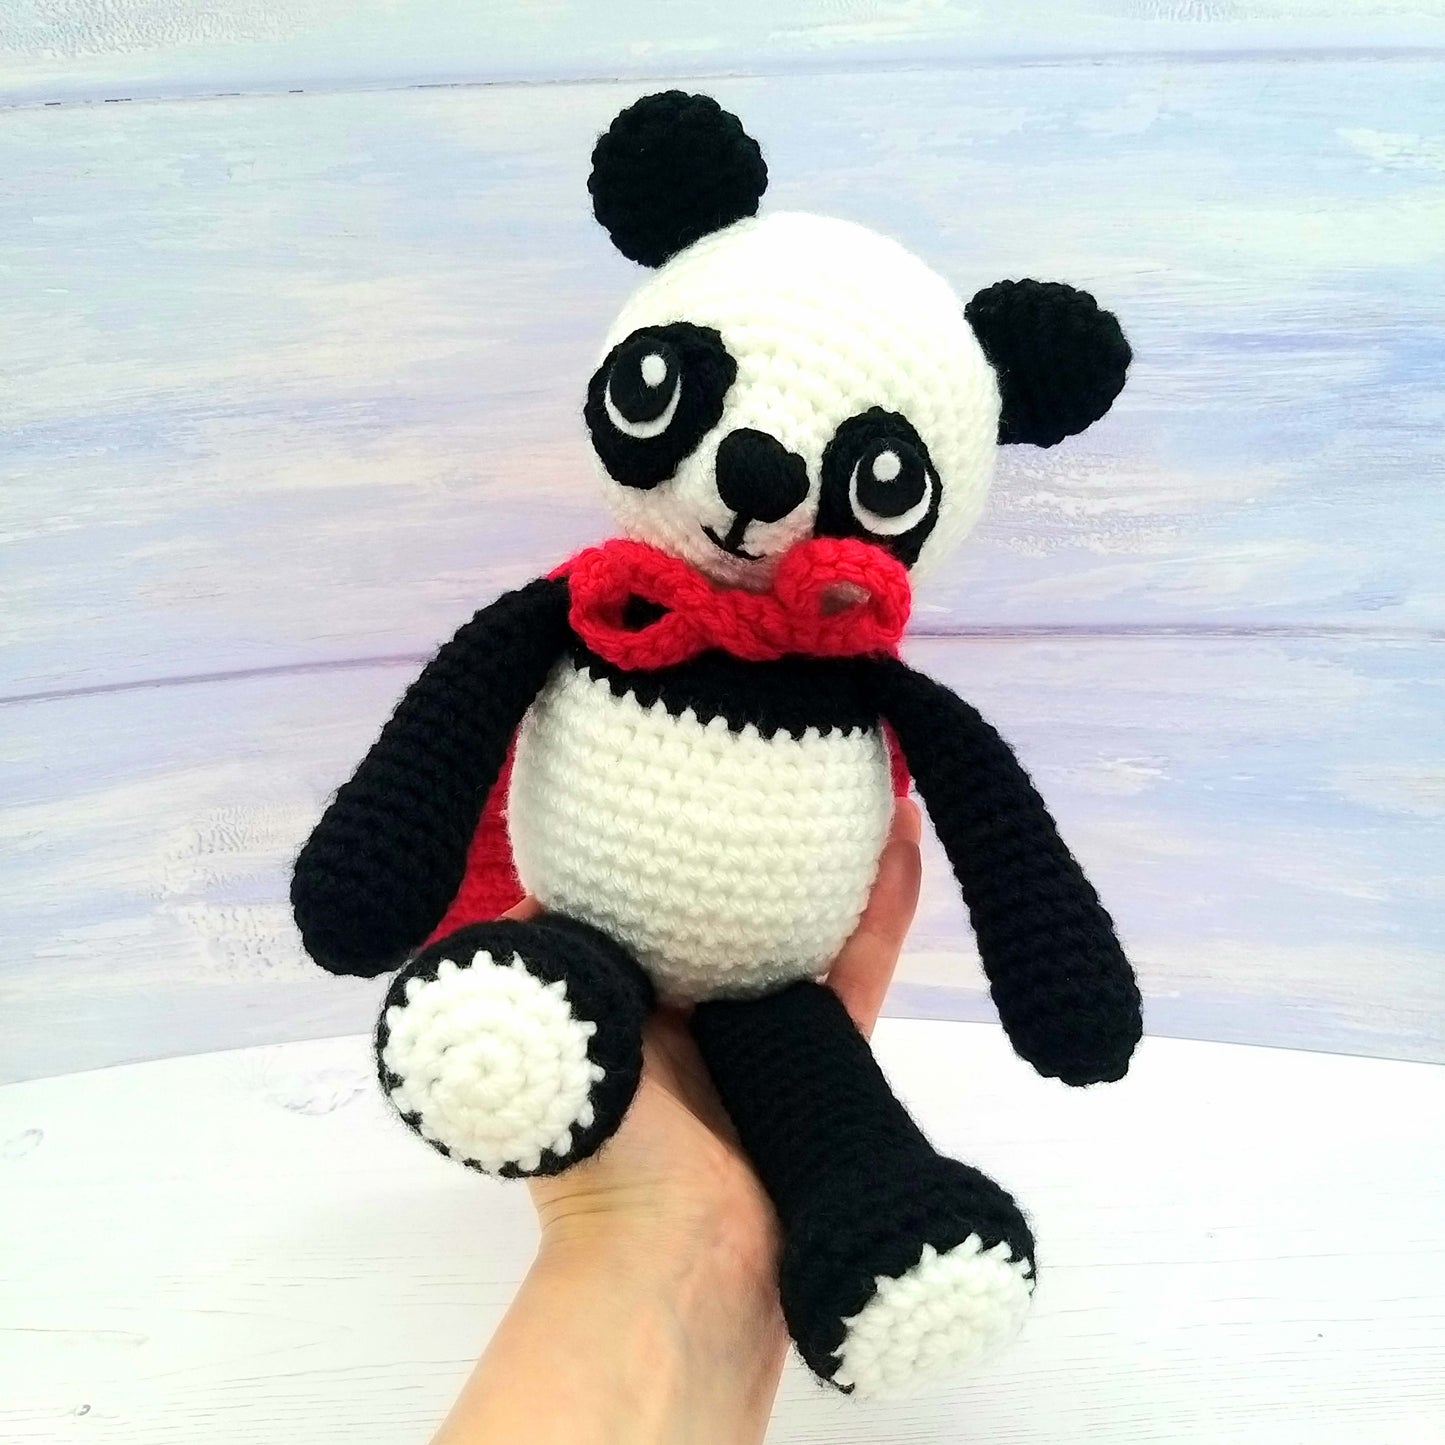 Peter and Melinda the Panda - PDF Crochet Pattern